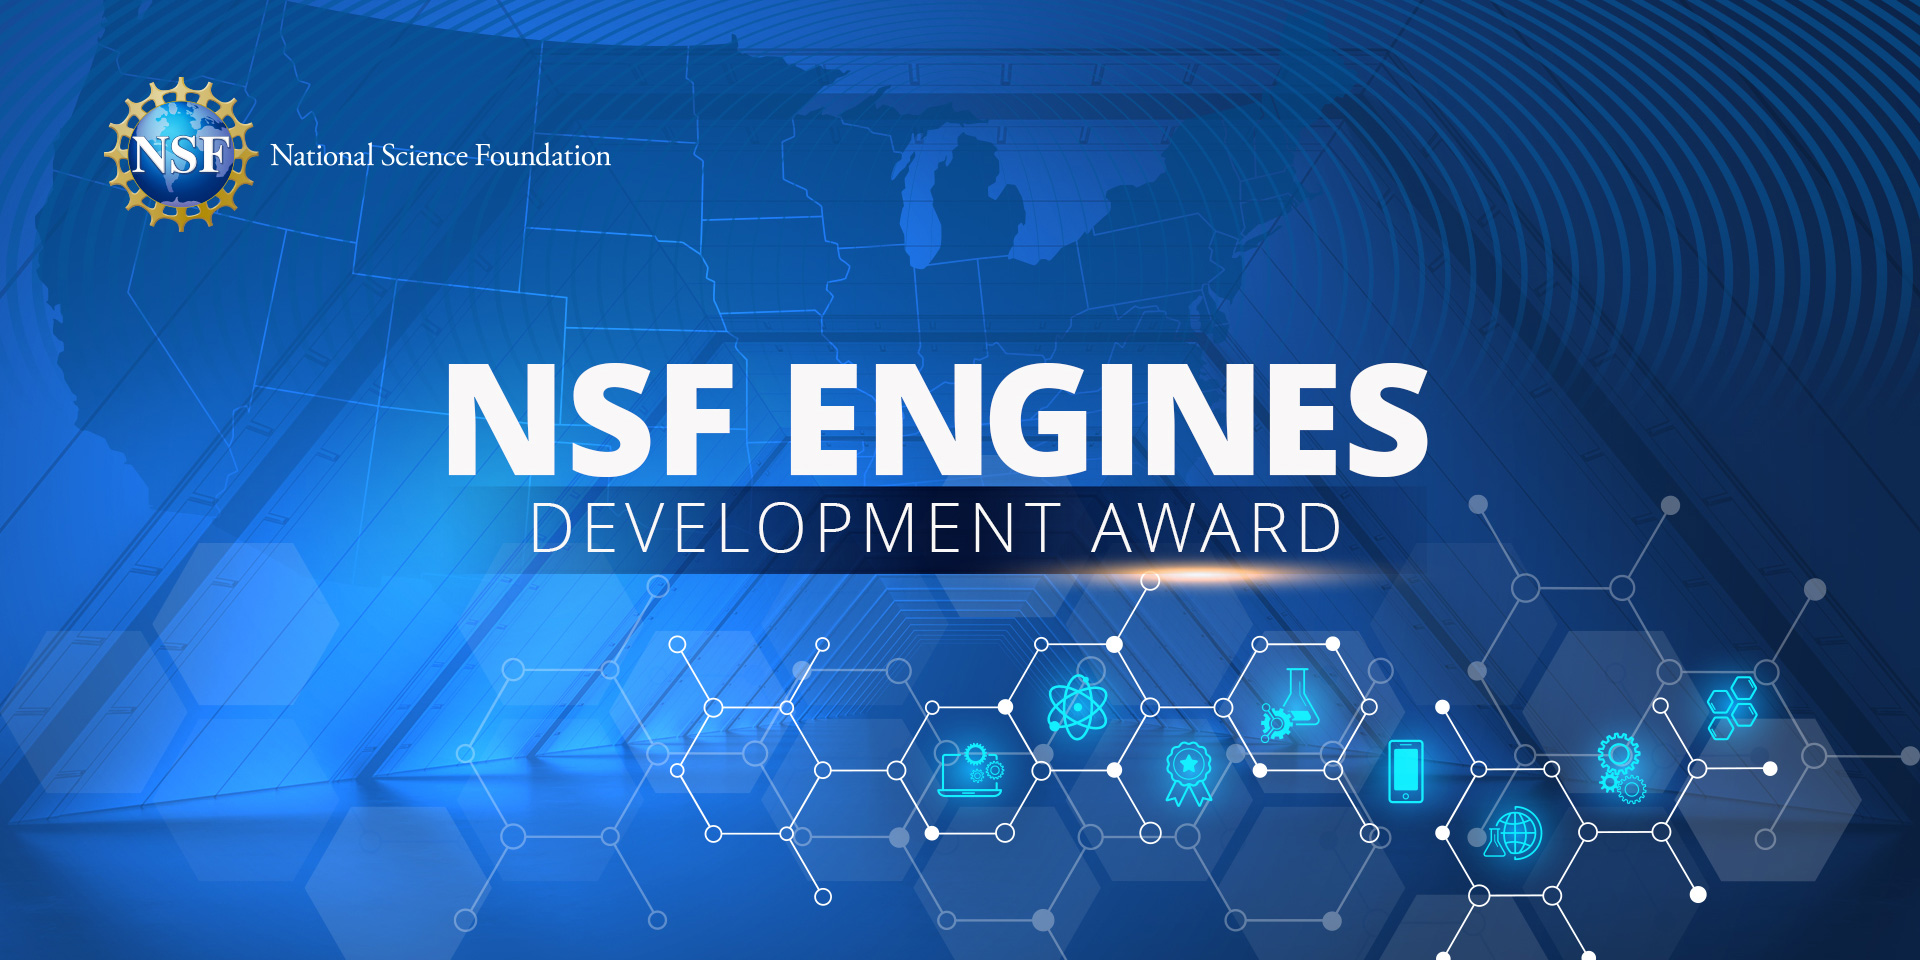 Nsf Engines Development Award 